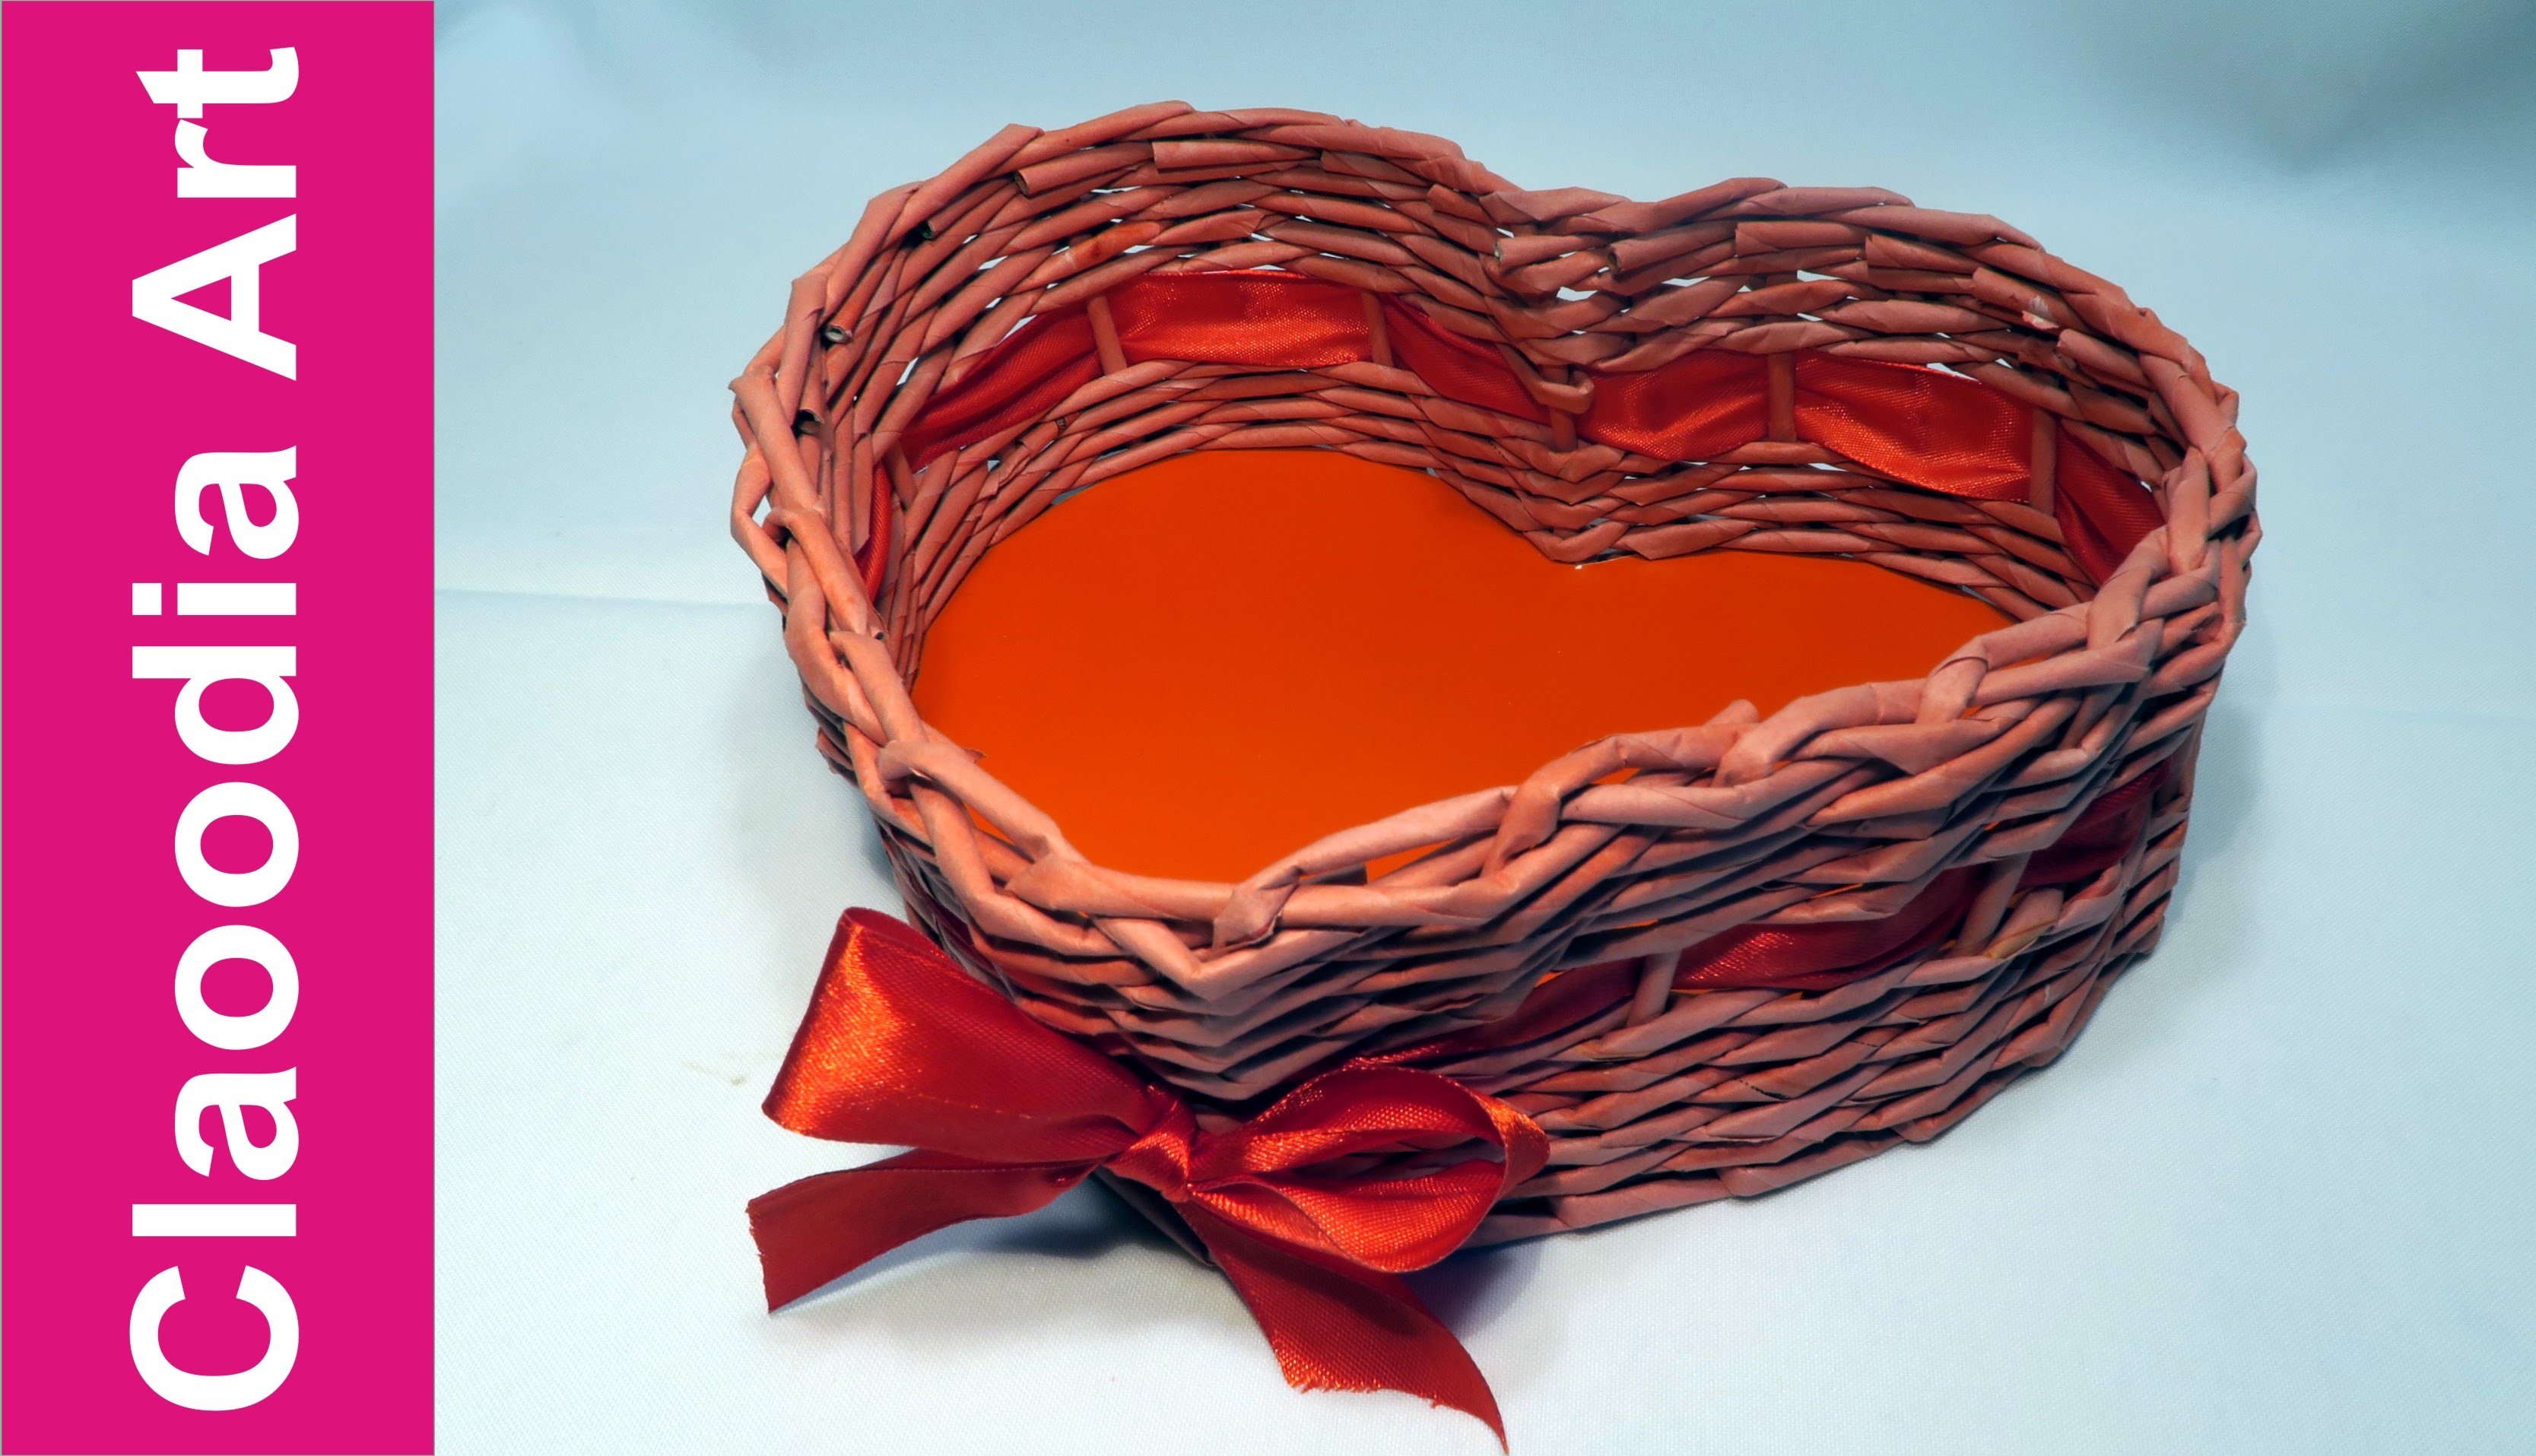 Koszyk SERCE, papierowa wiklina (basket heart, wicker paper)